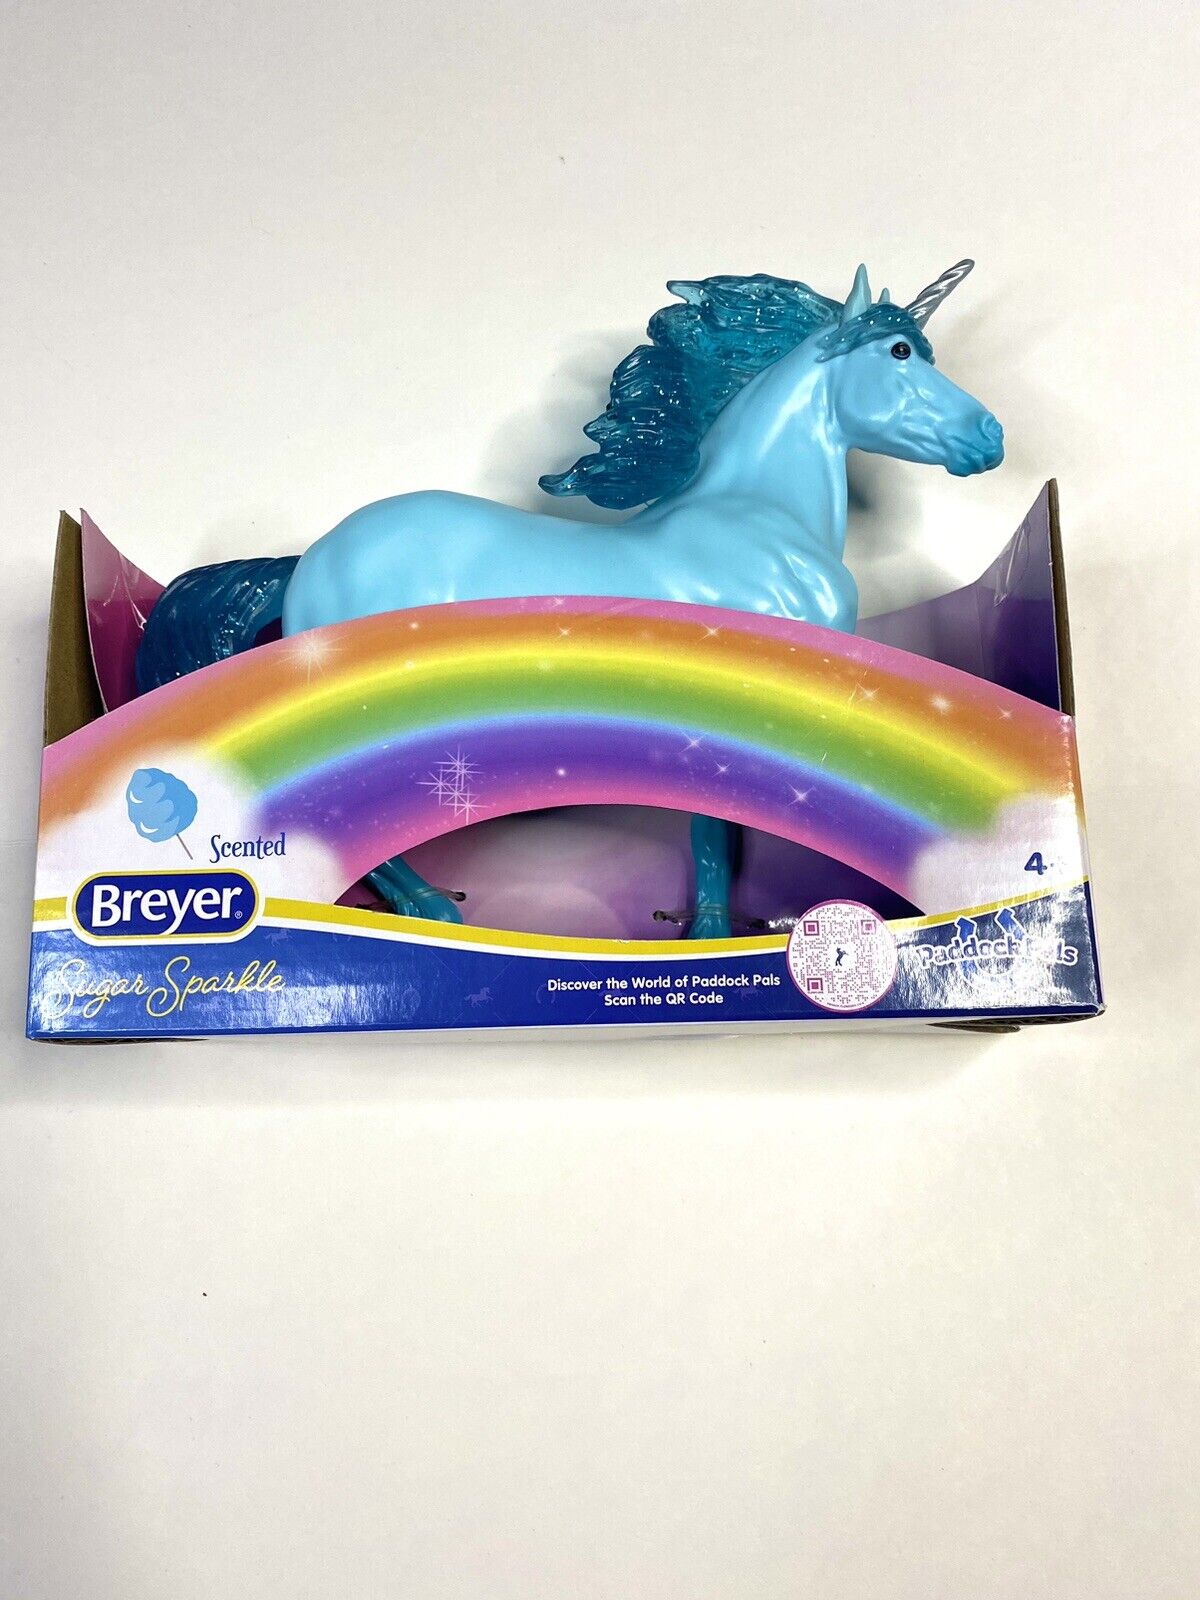 Breyer® Paddock Pals SCENTED Sugar Sparkle toy unicorn figure (8 x 6 inch)